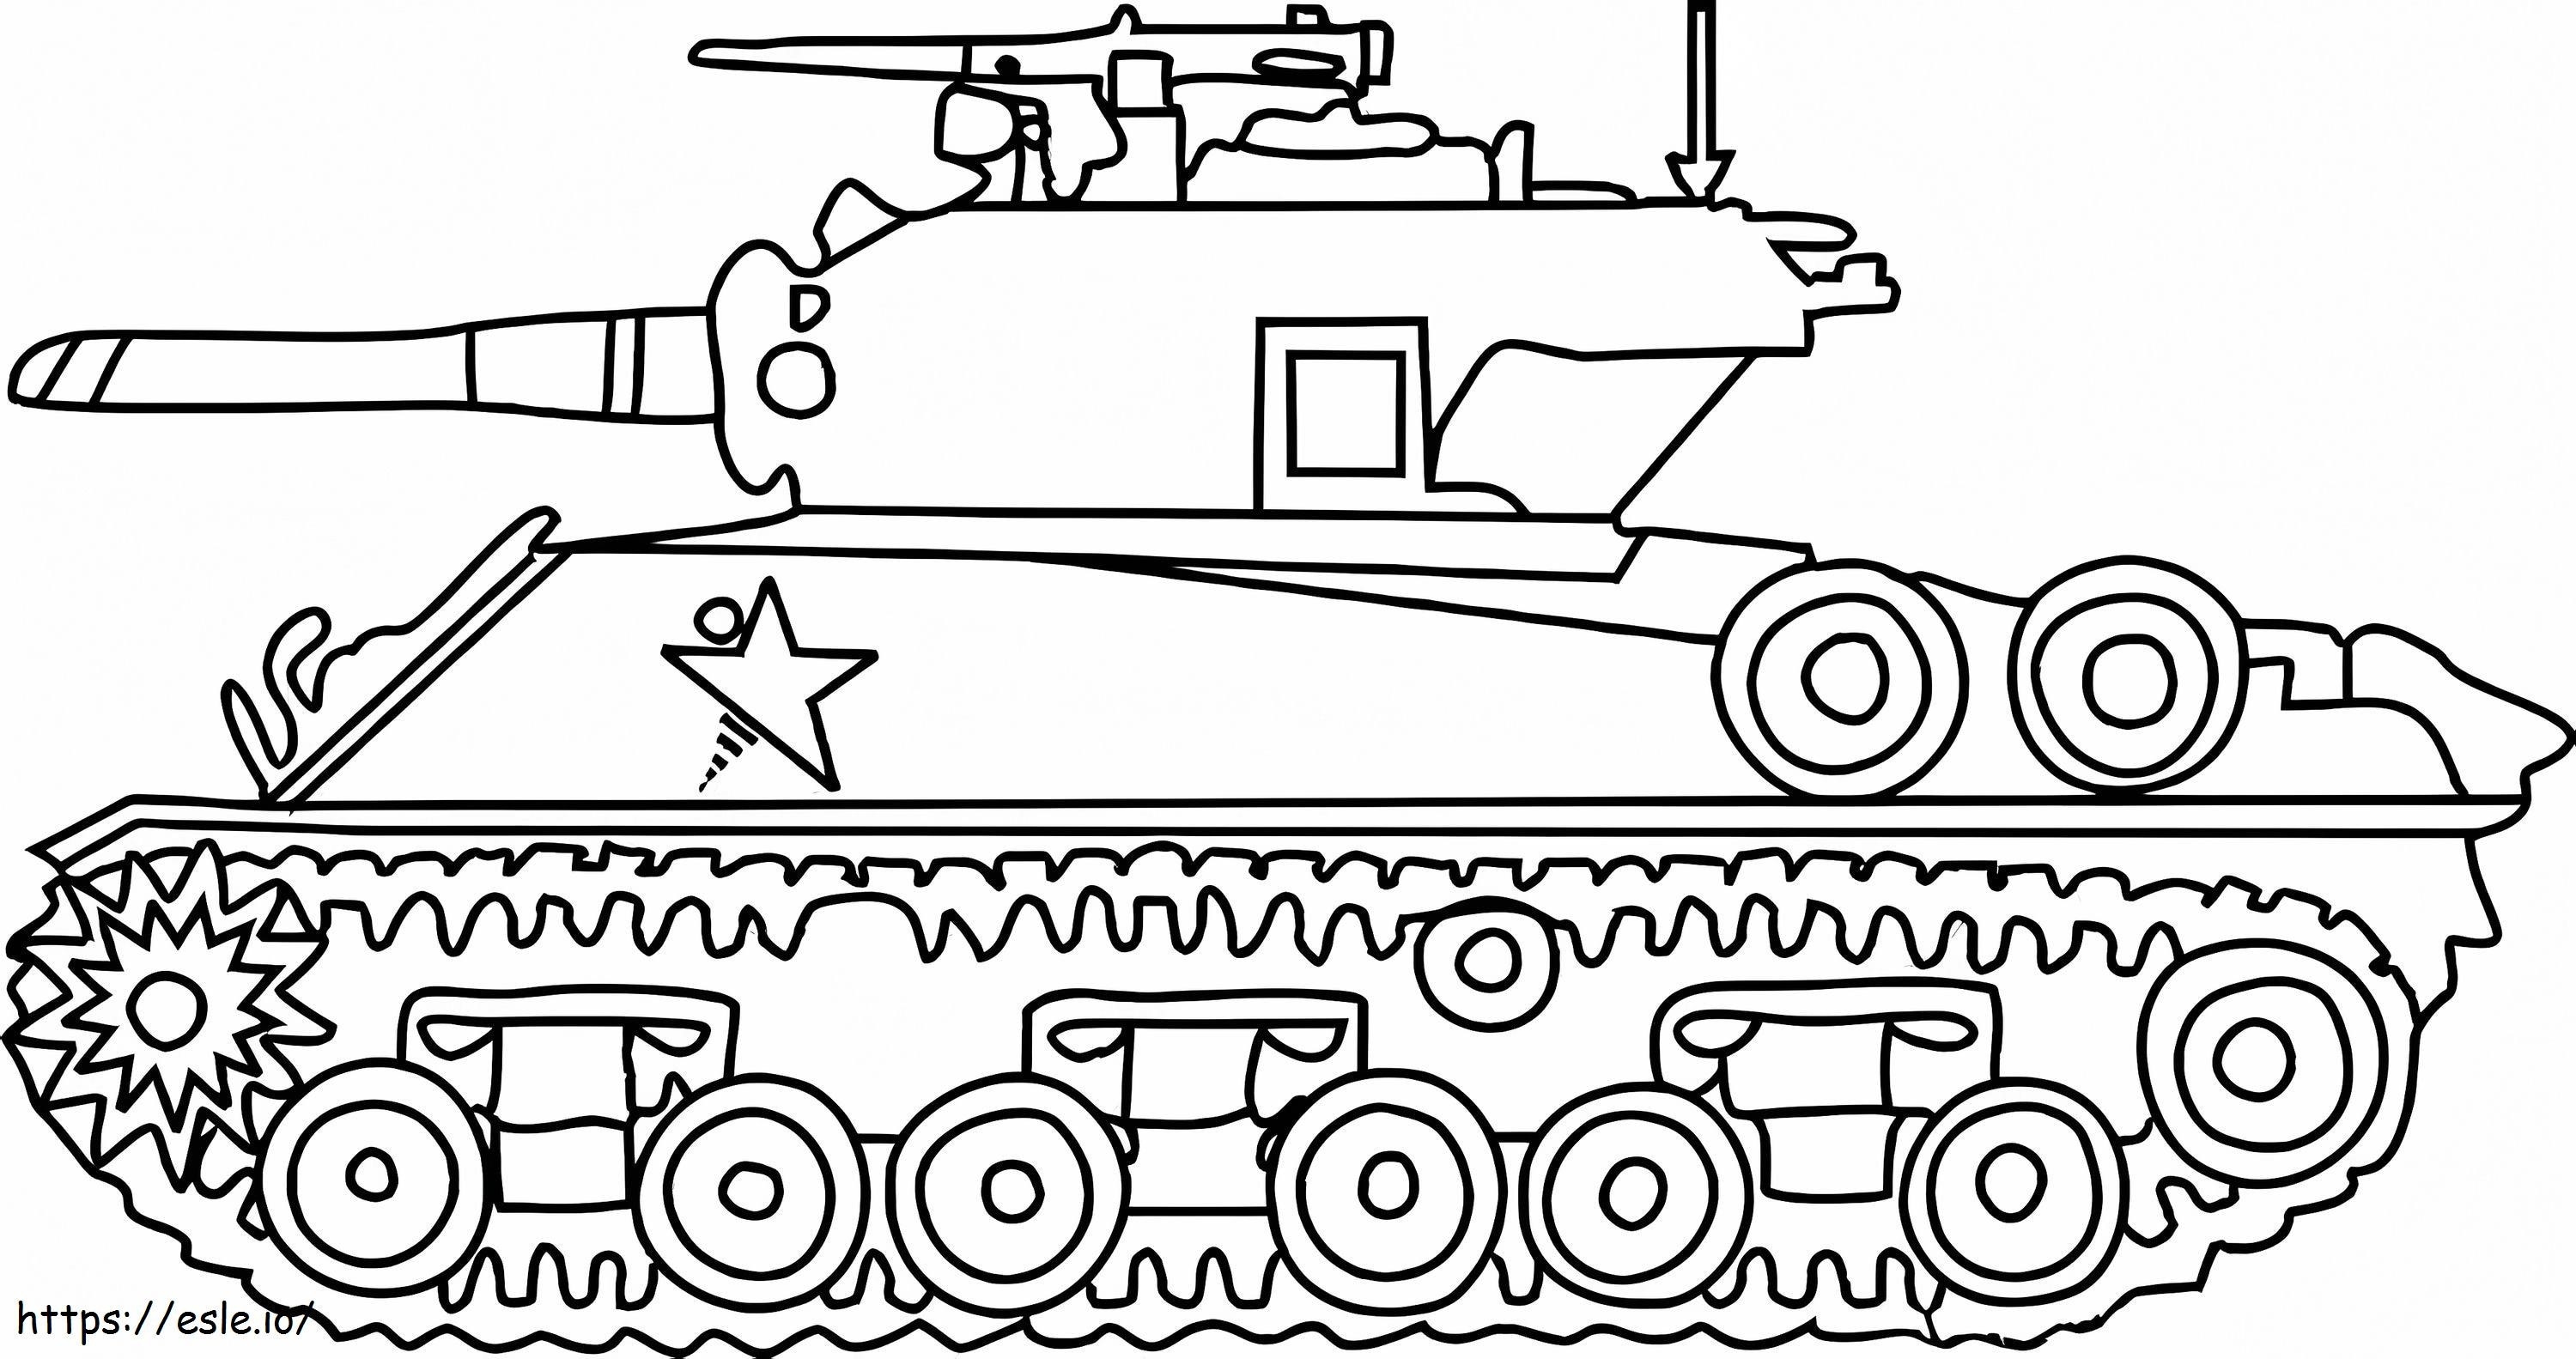 Vietnam Tank coloring page